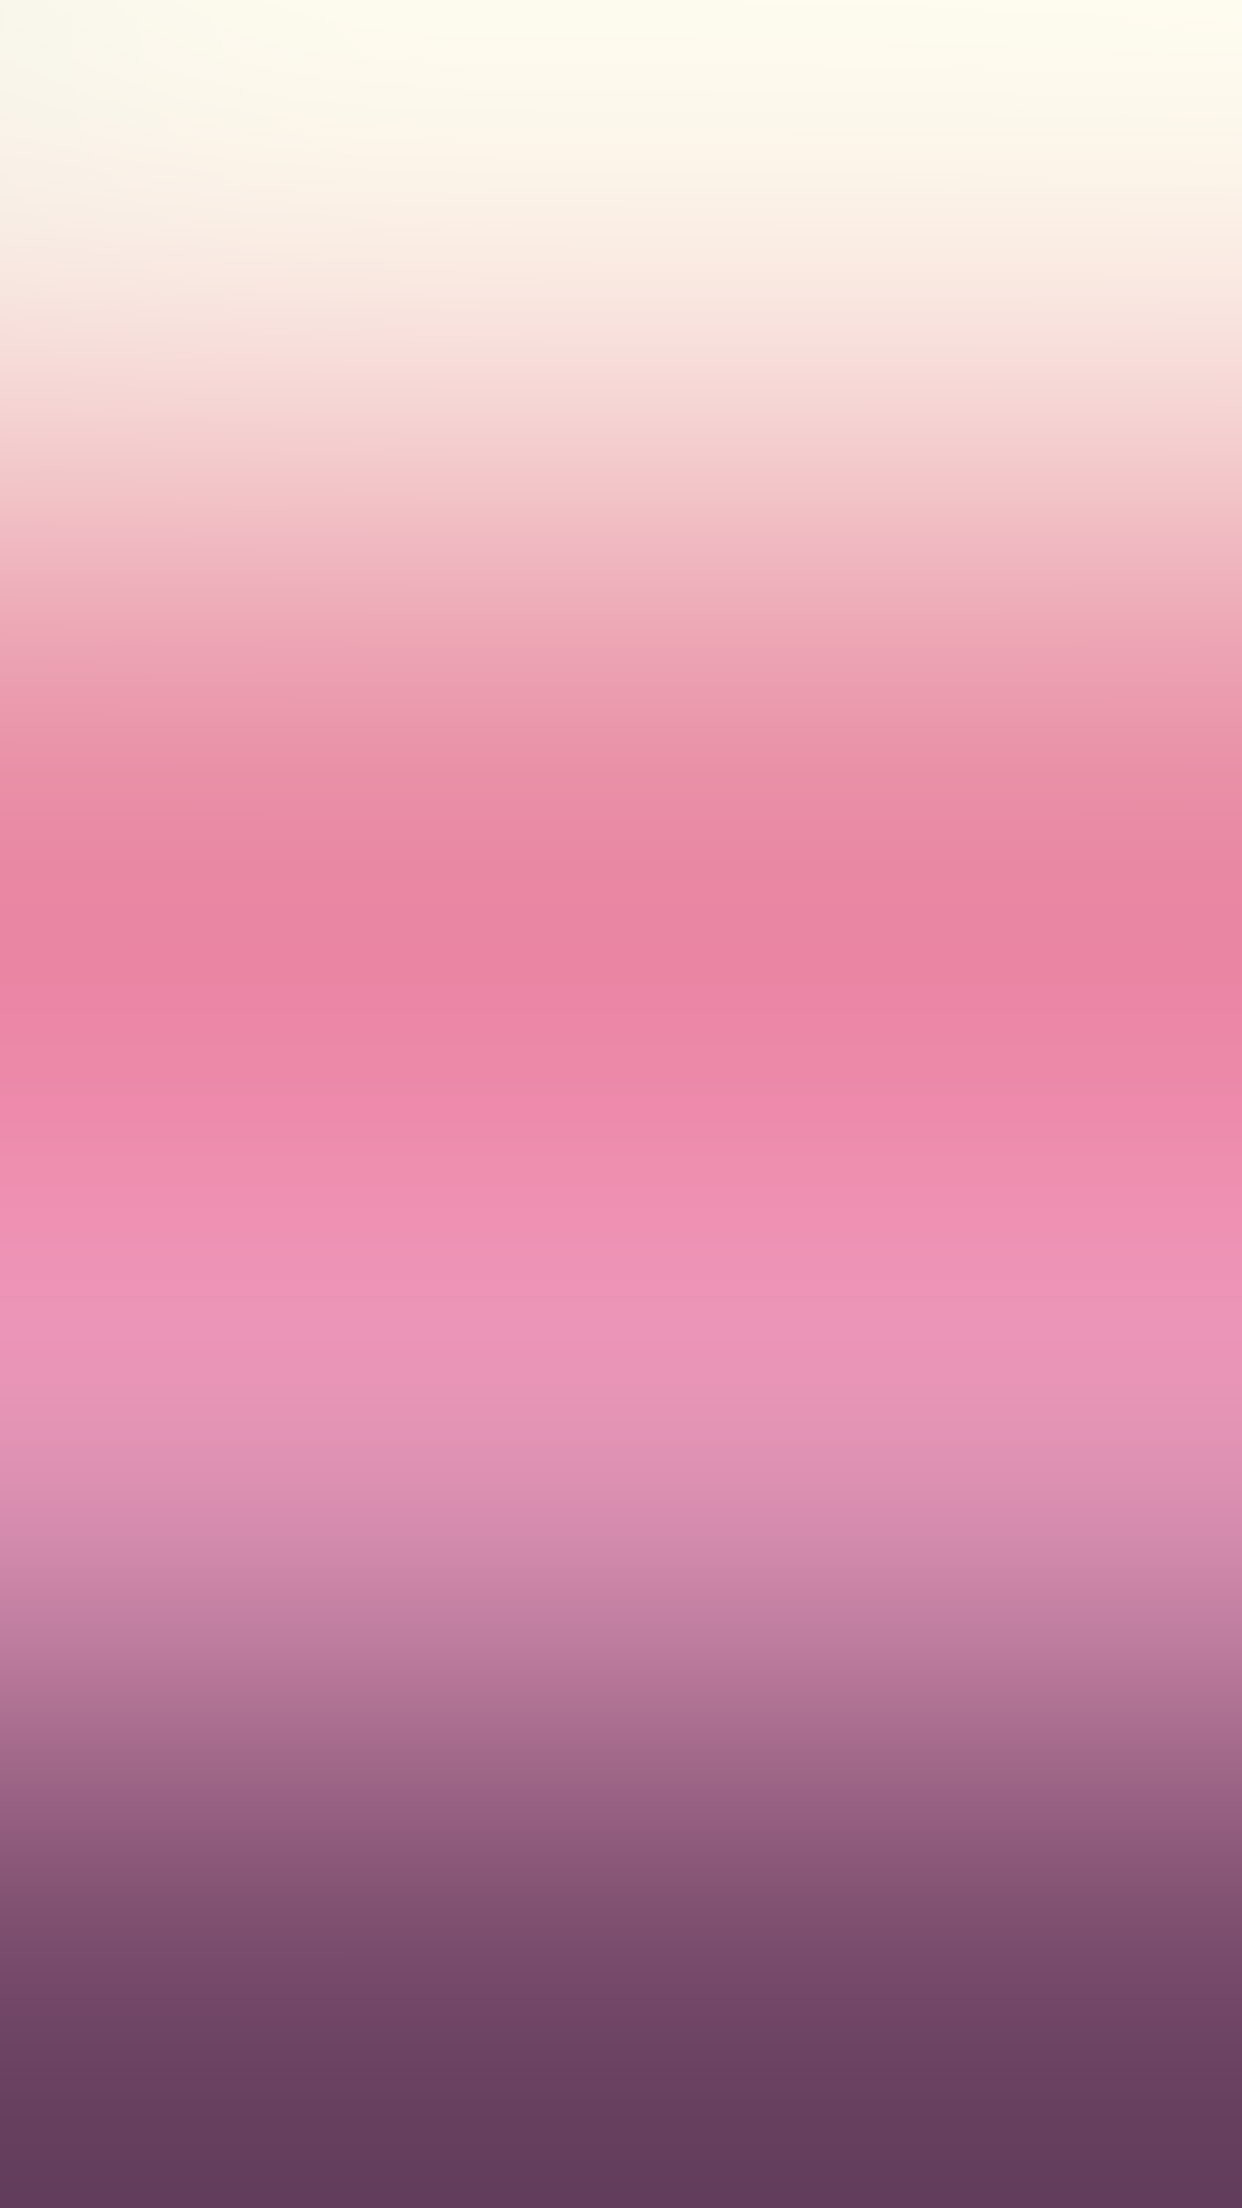 rosa claro fondo de pantalla para iphone,rosado,púrpura,violeta,lila,cielo